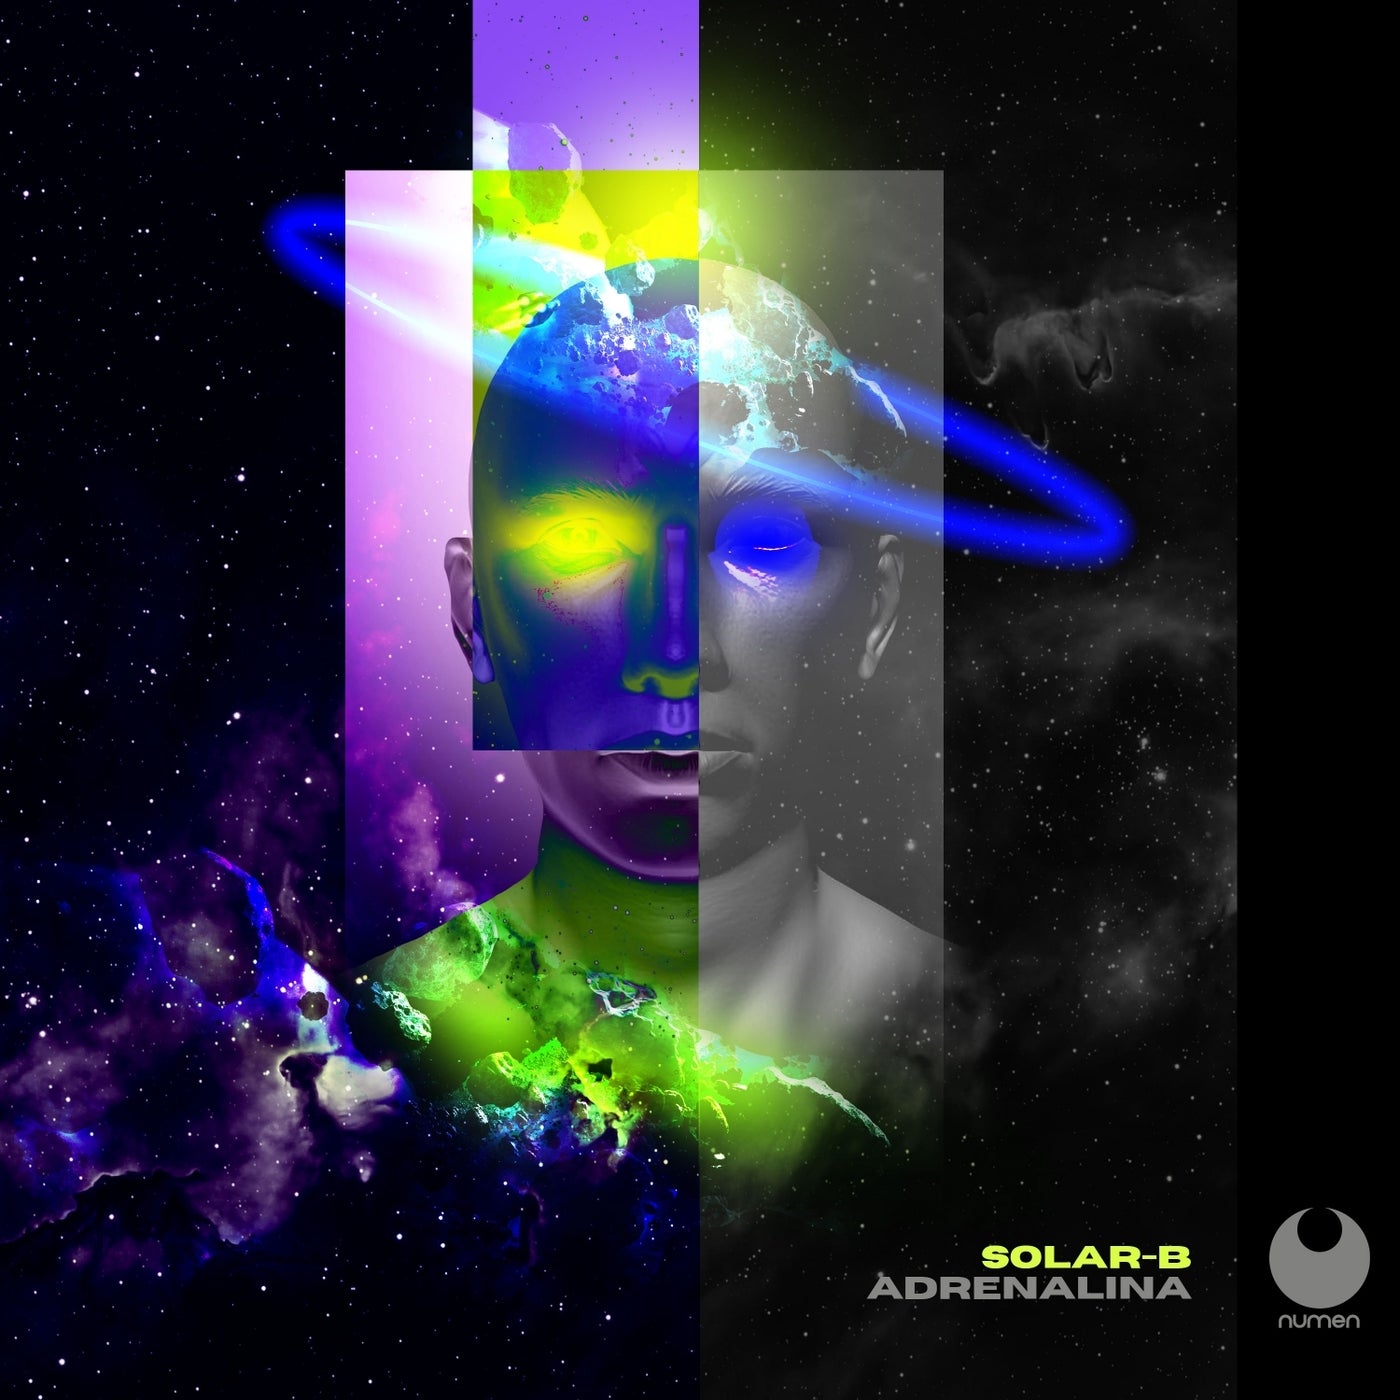 Solar - B - Adrenalina (original Mix) on Revolution Radio